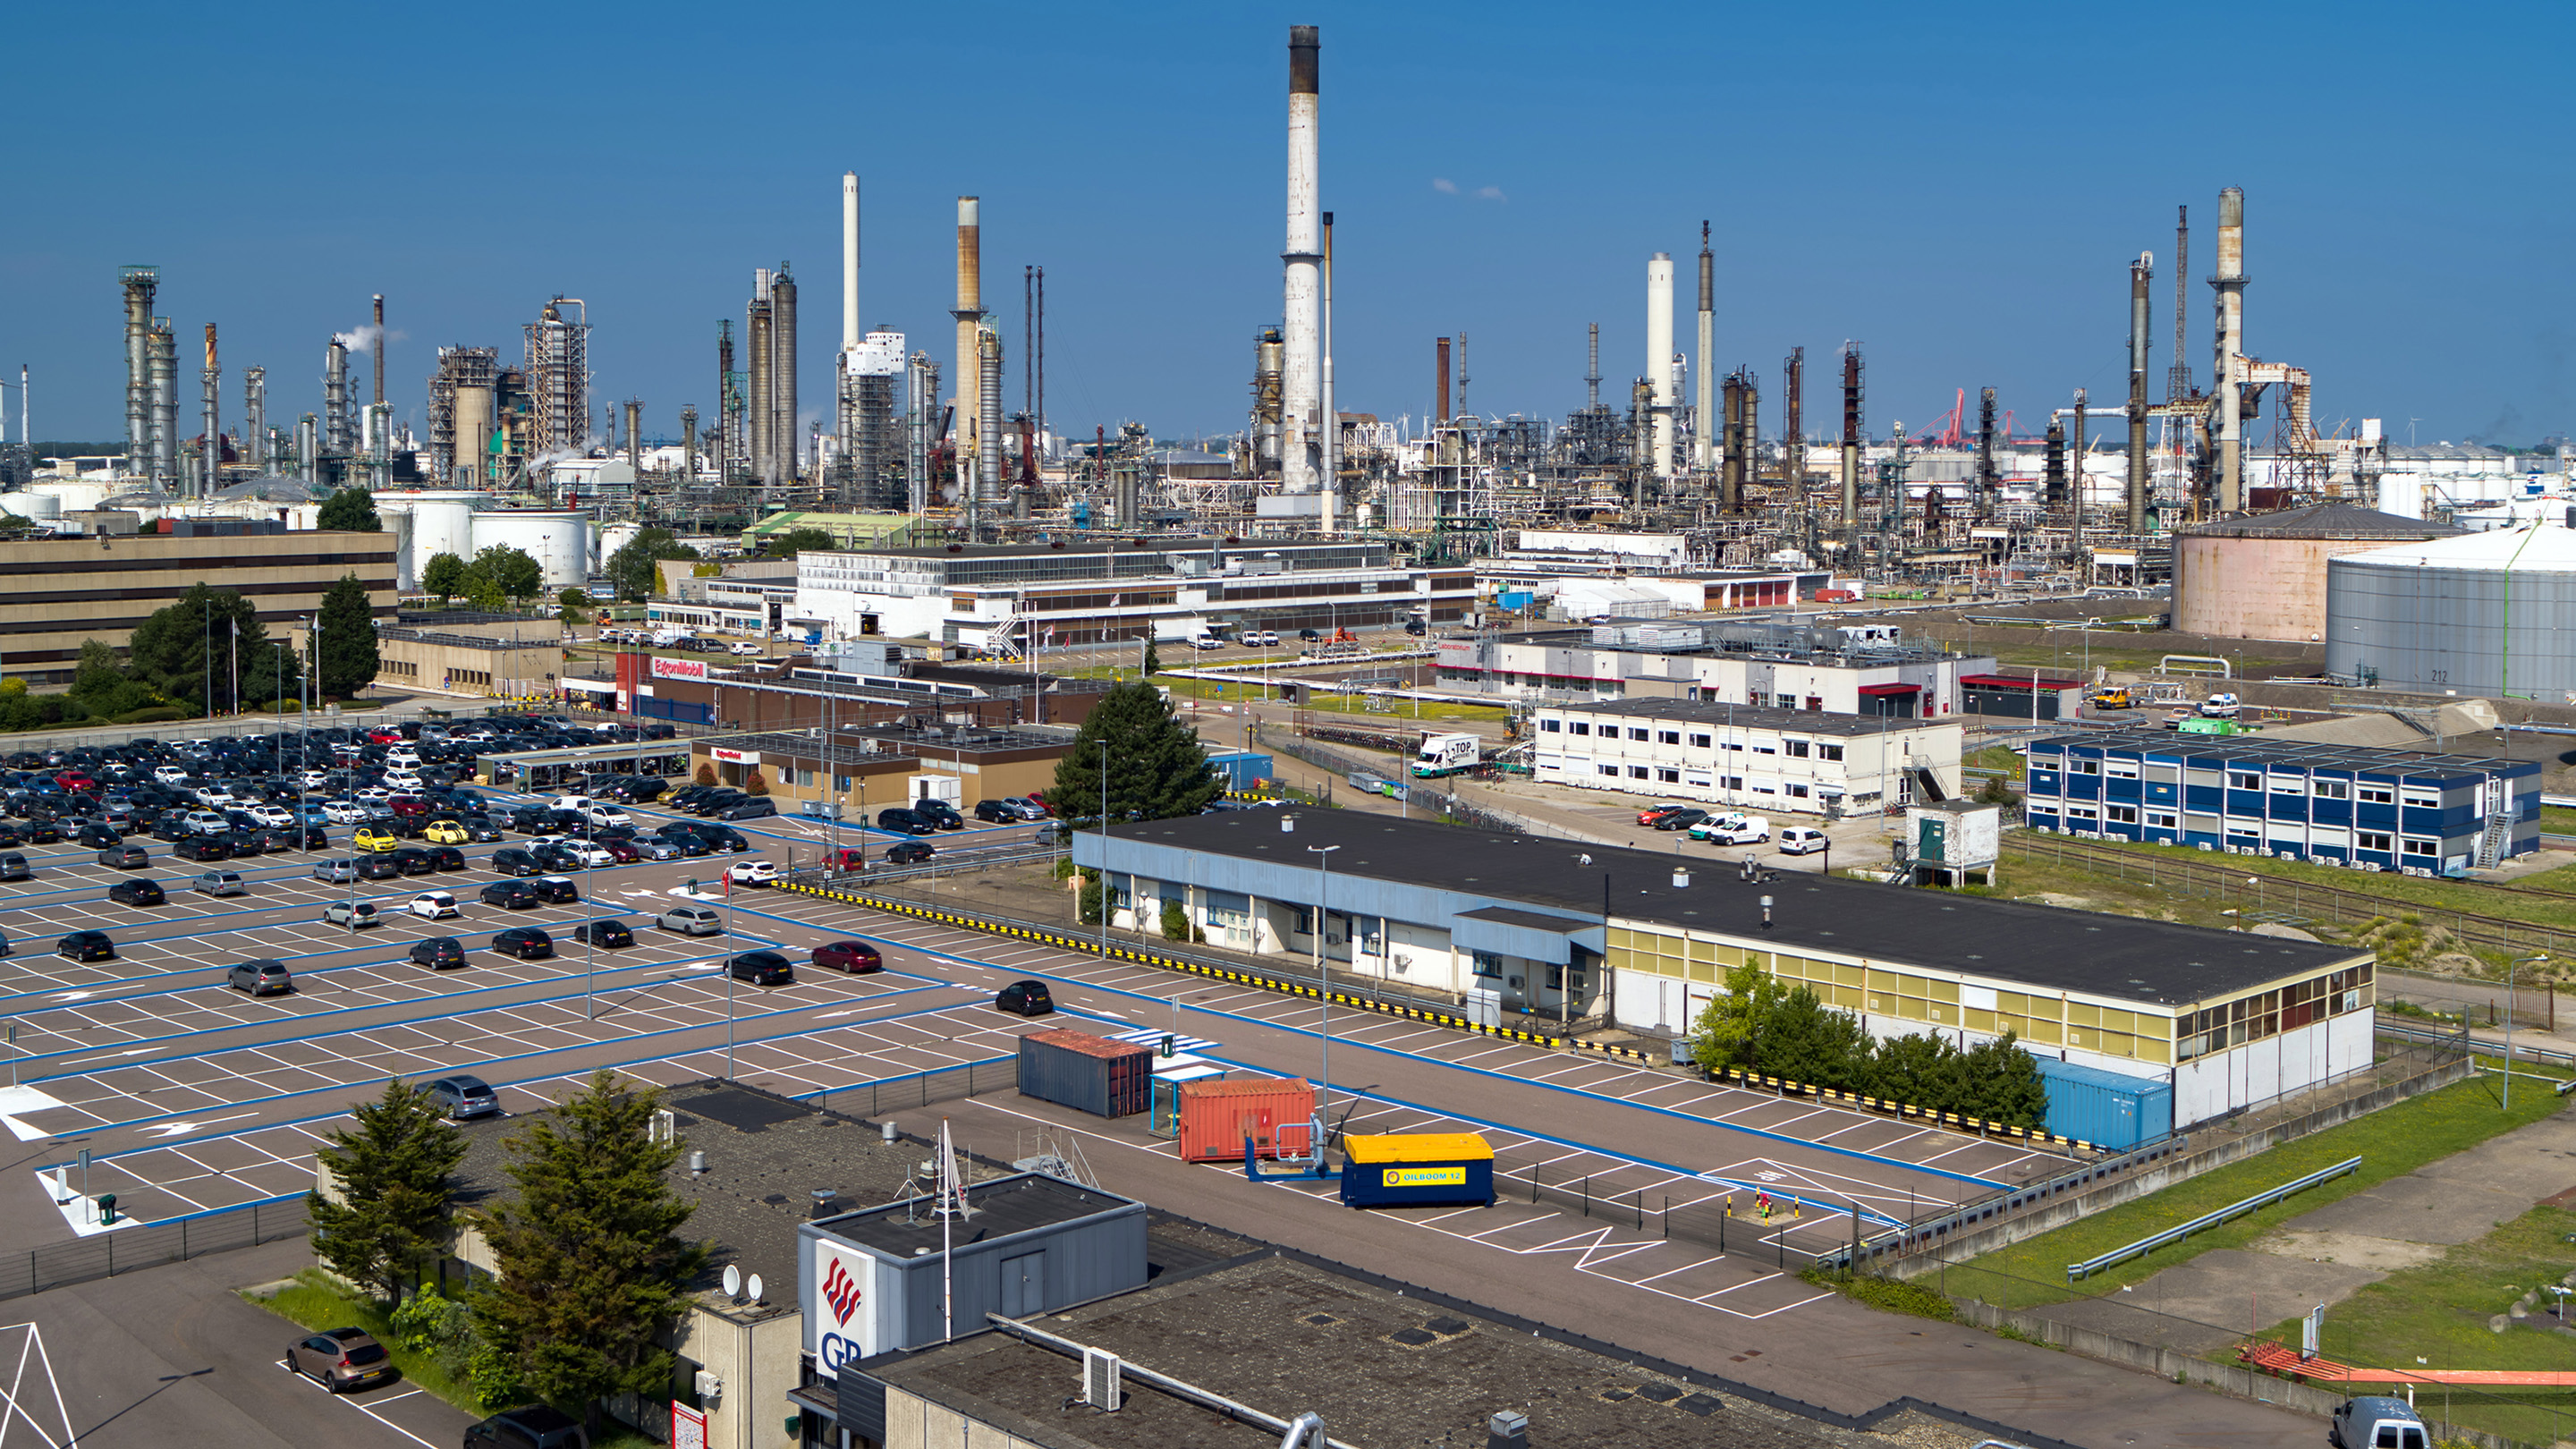 Rotterdam refinery